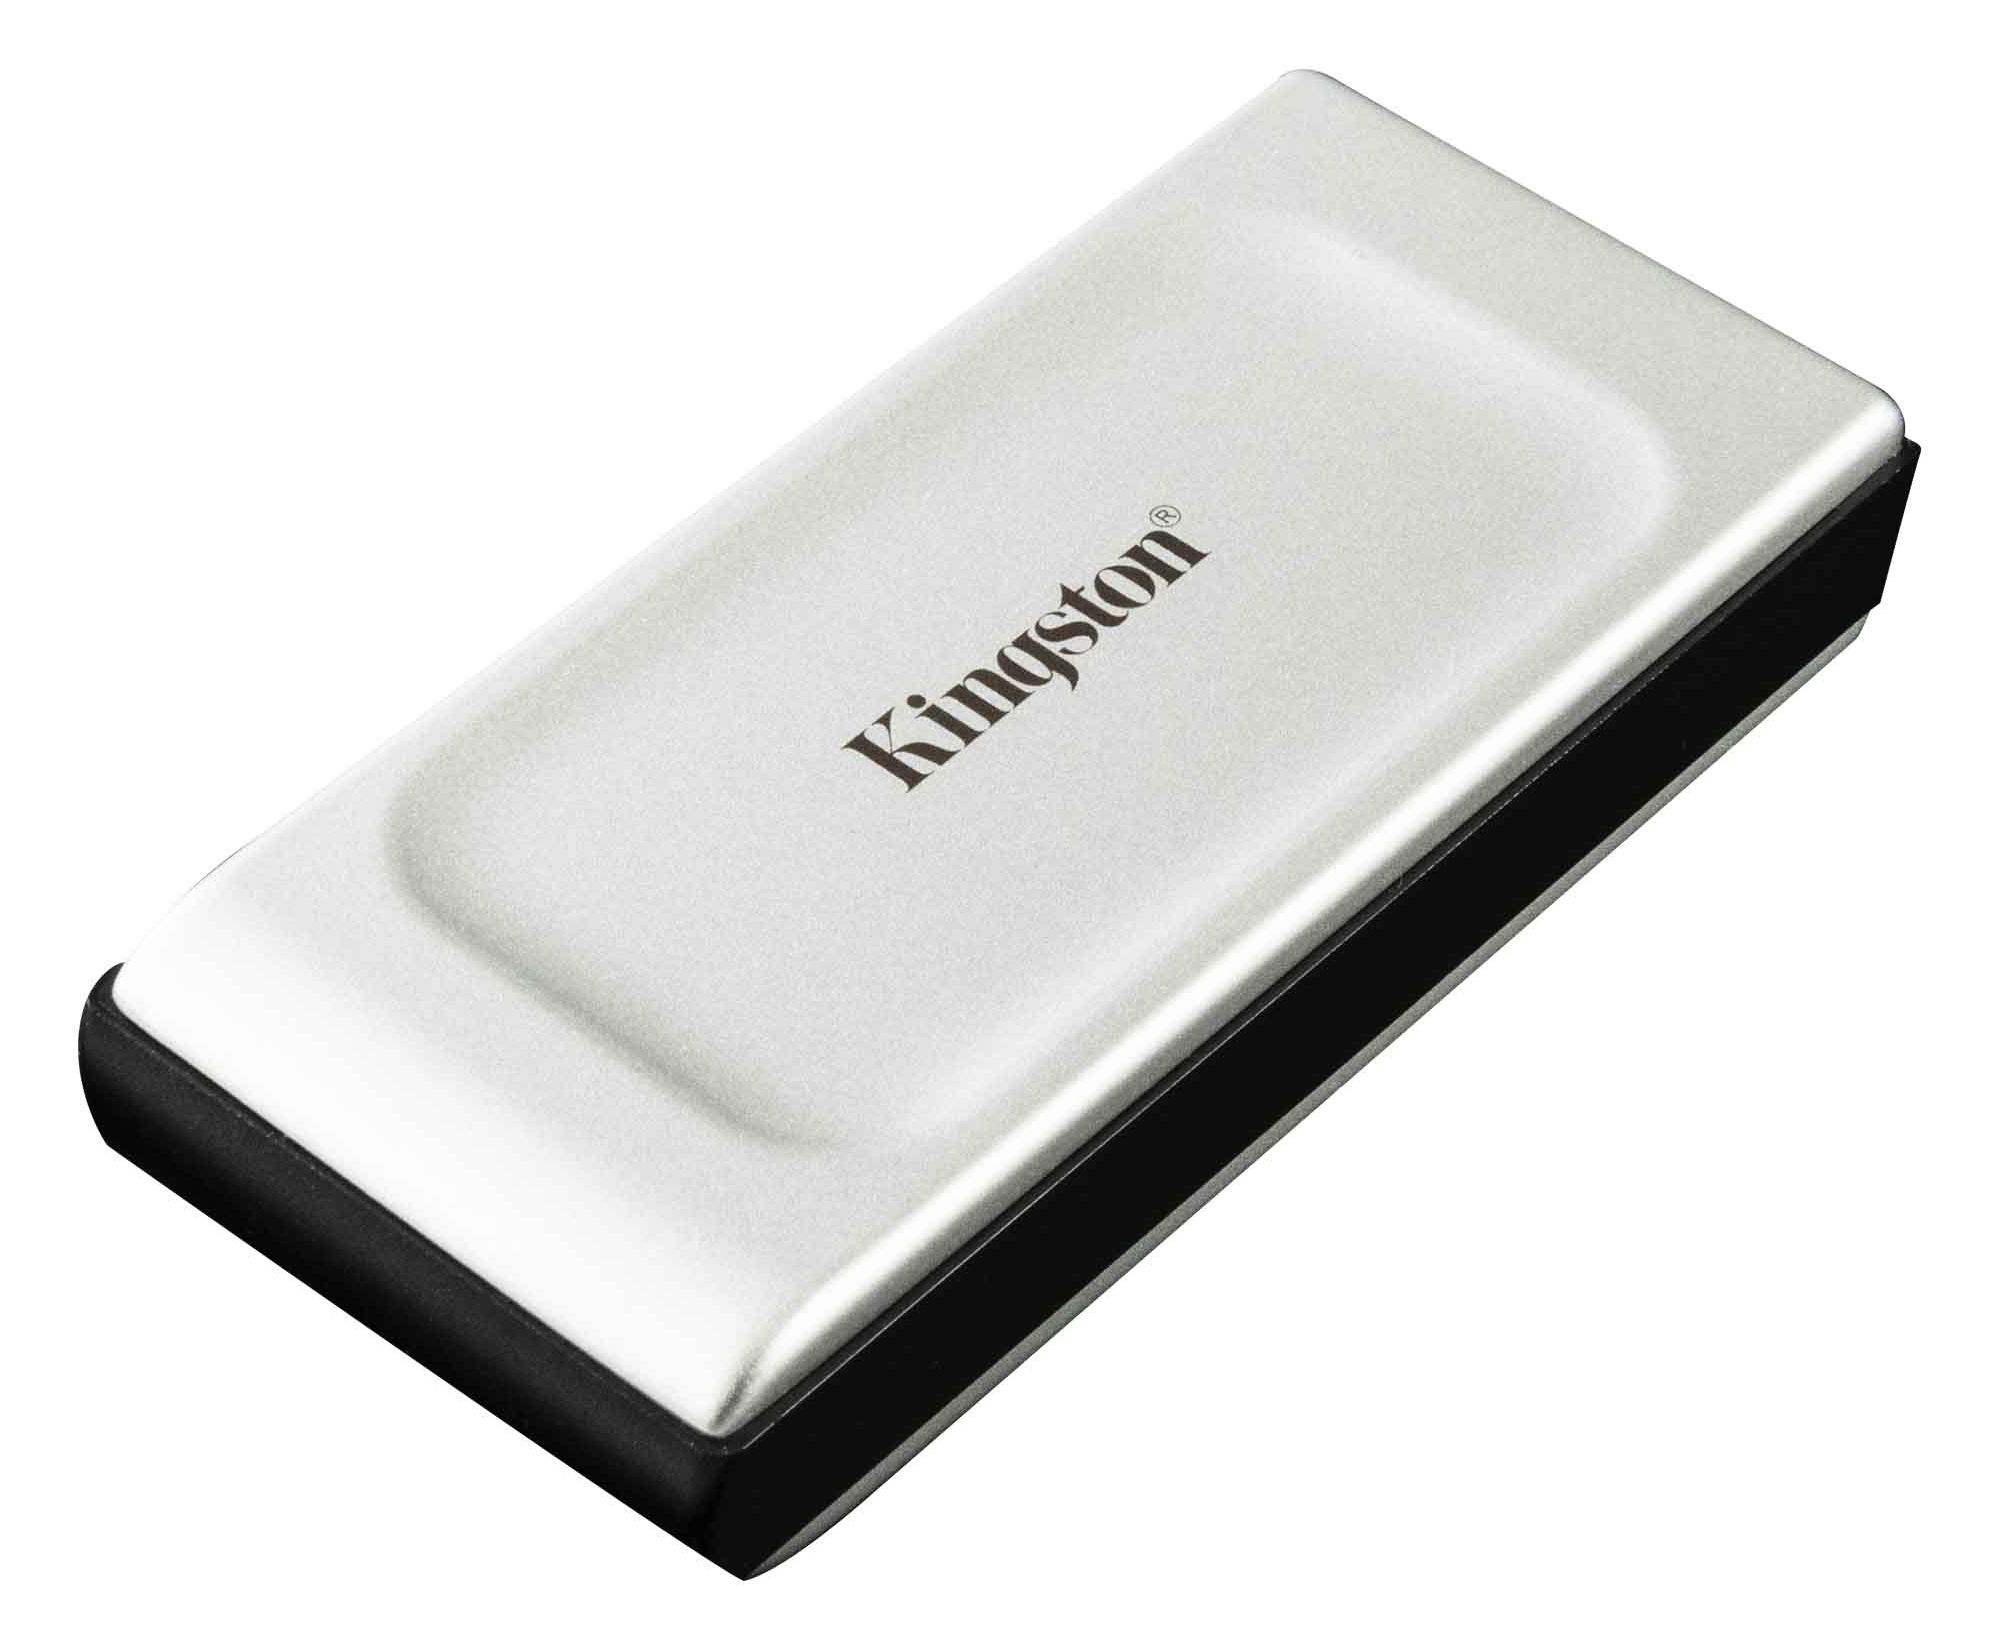 Kingston XS200 USB SSD - أفضل SSD محمول عالي السعة